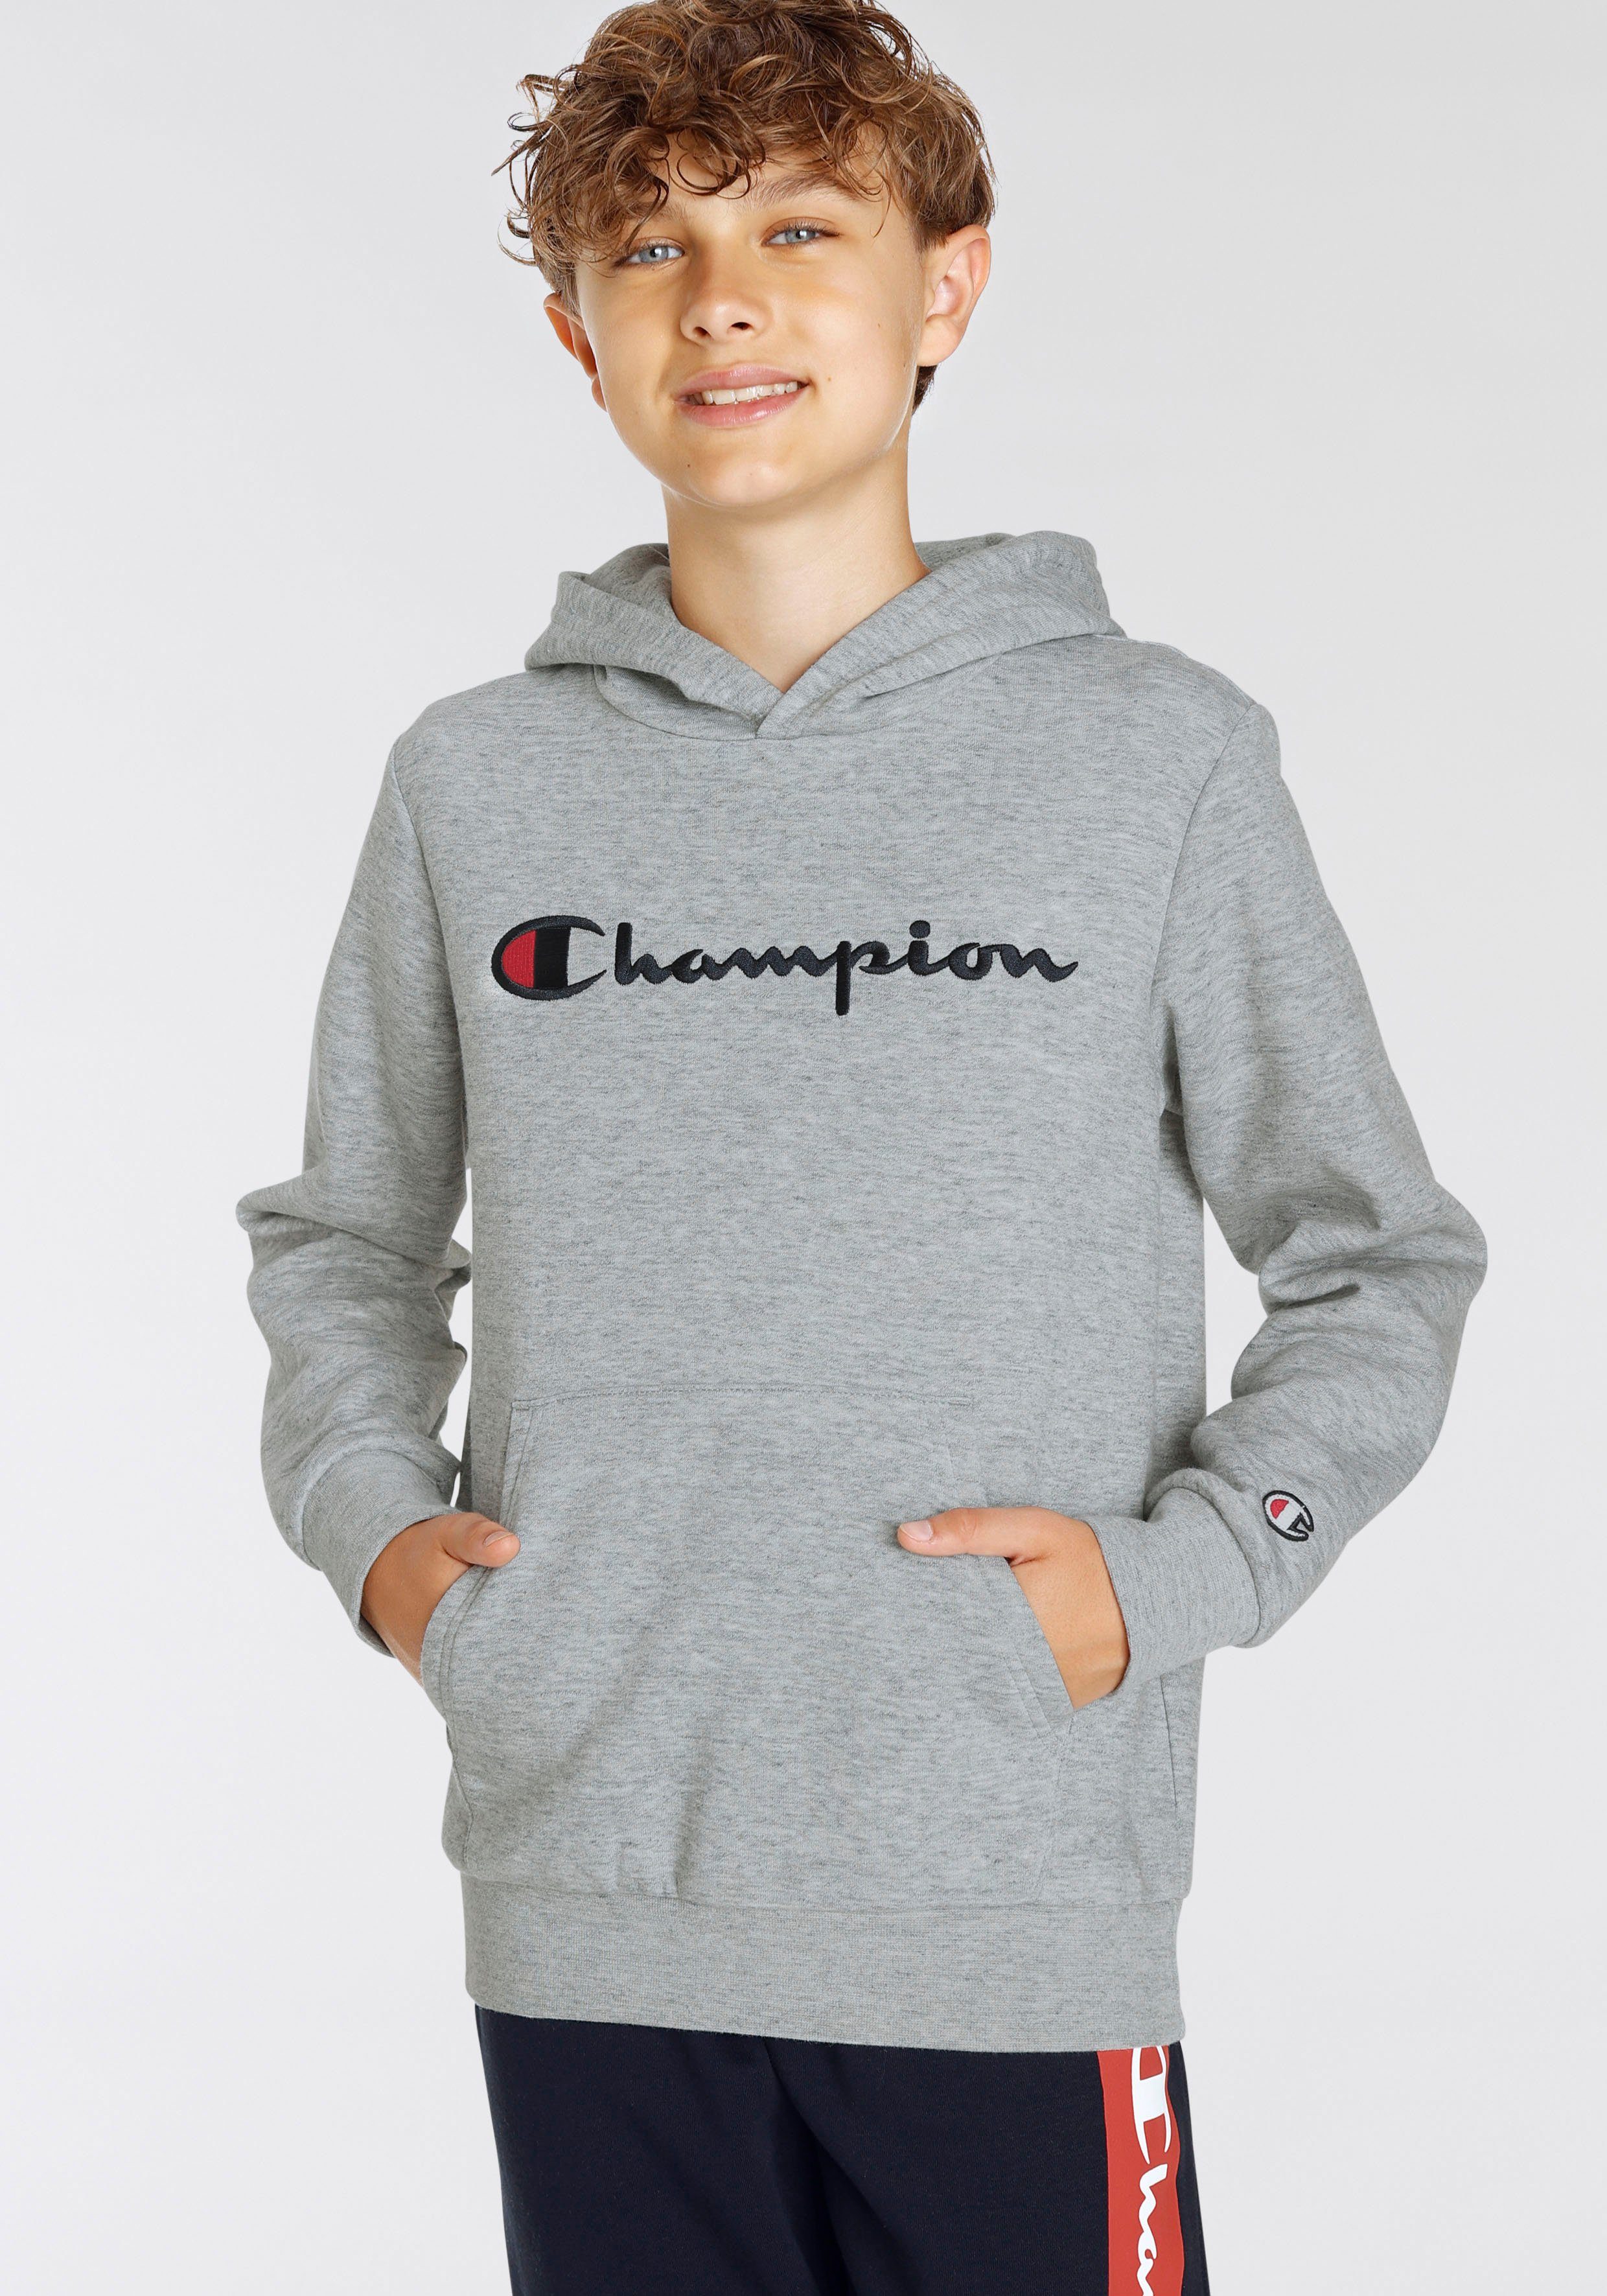 Sweatshirt Sweatshirt für Classic Champion 2 large Kinder - grau Hooded Logo